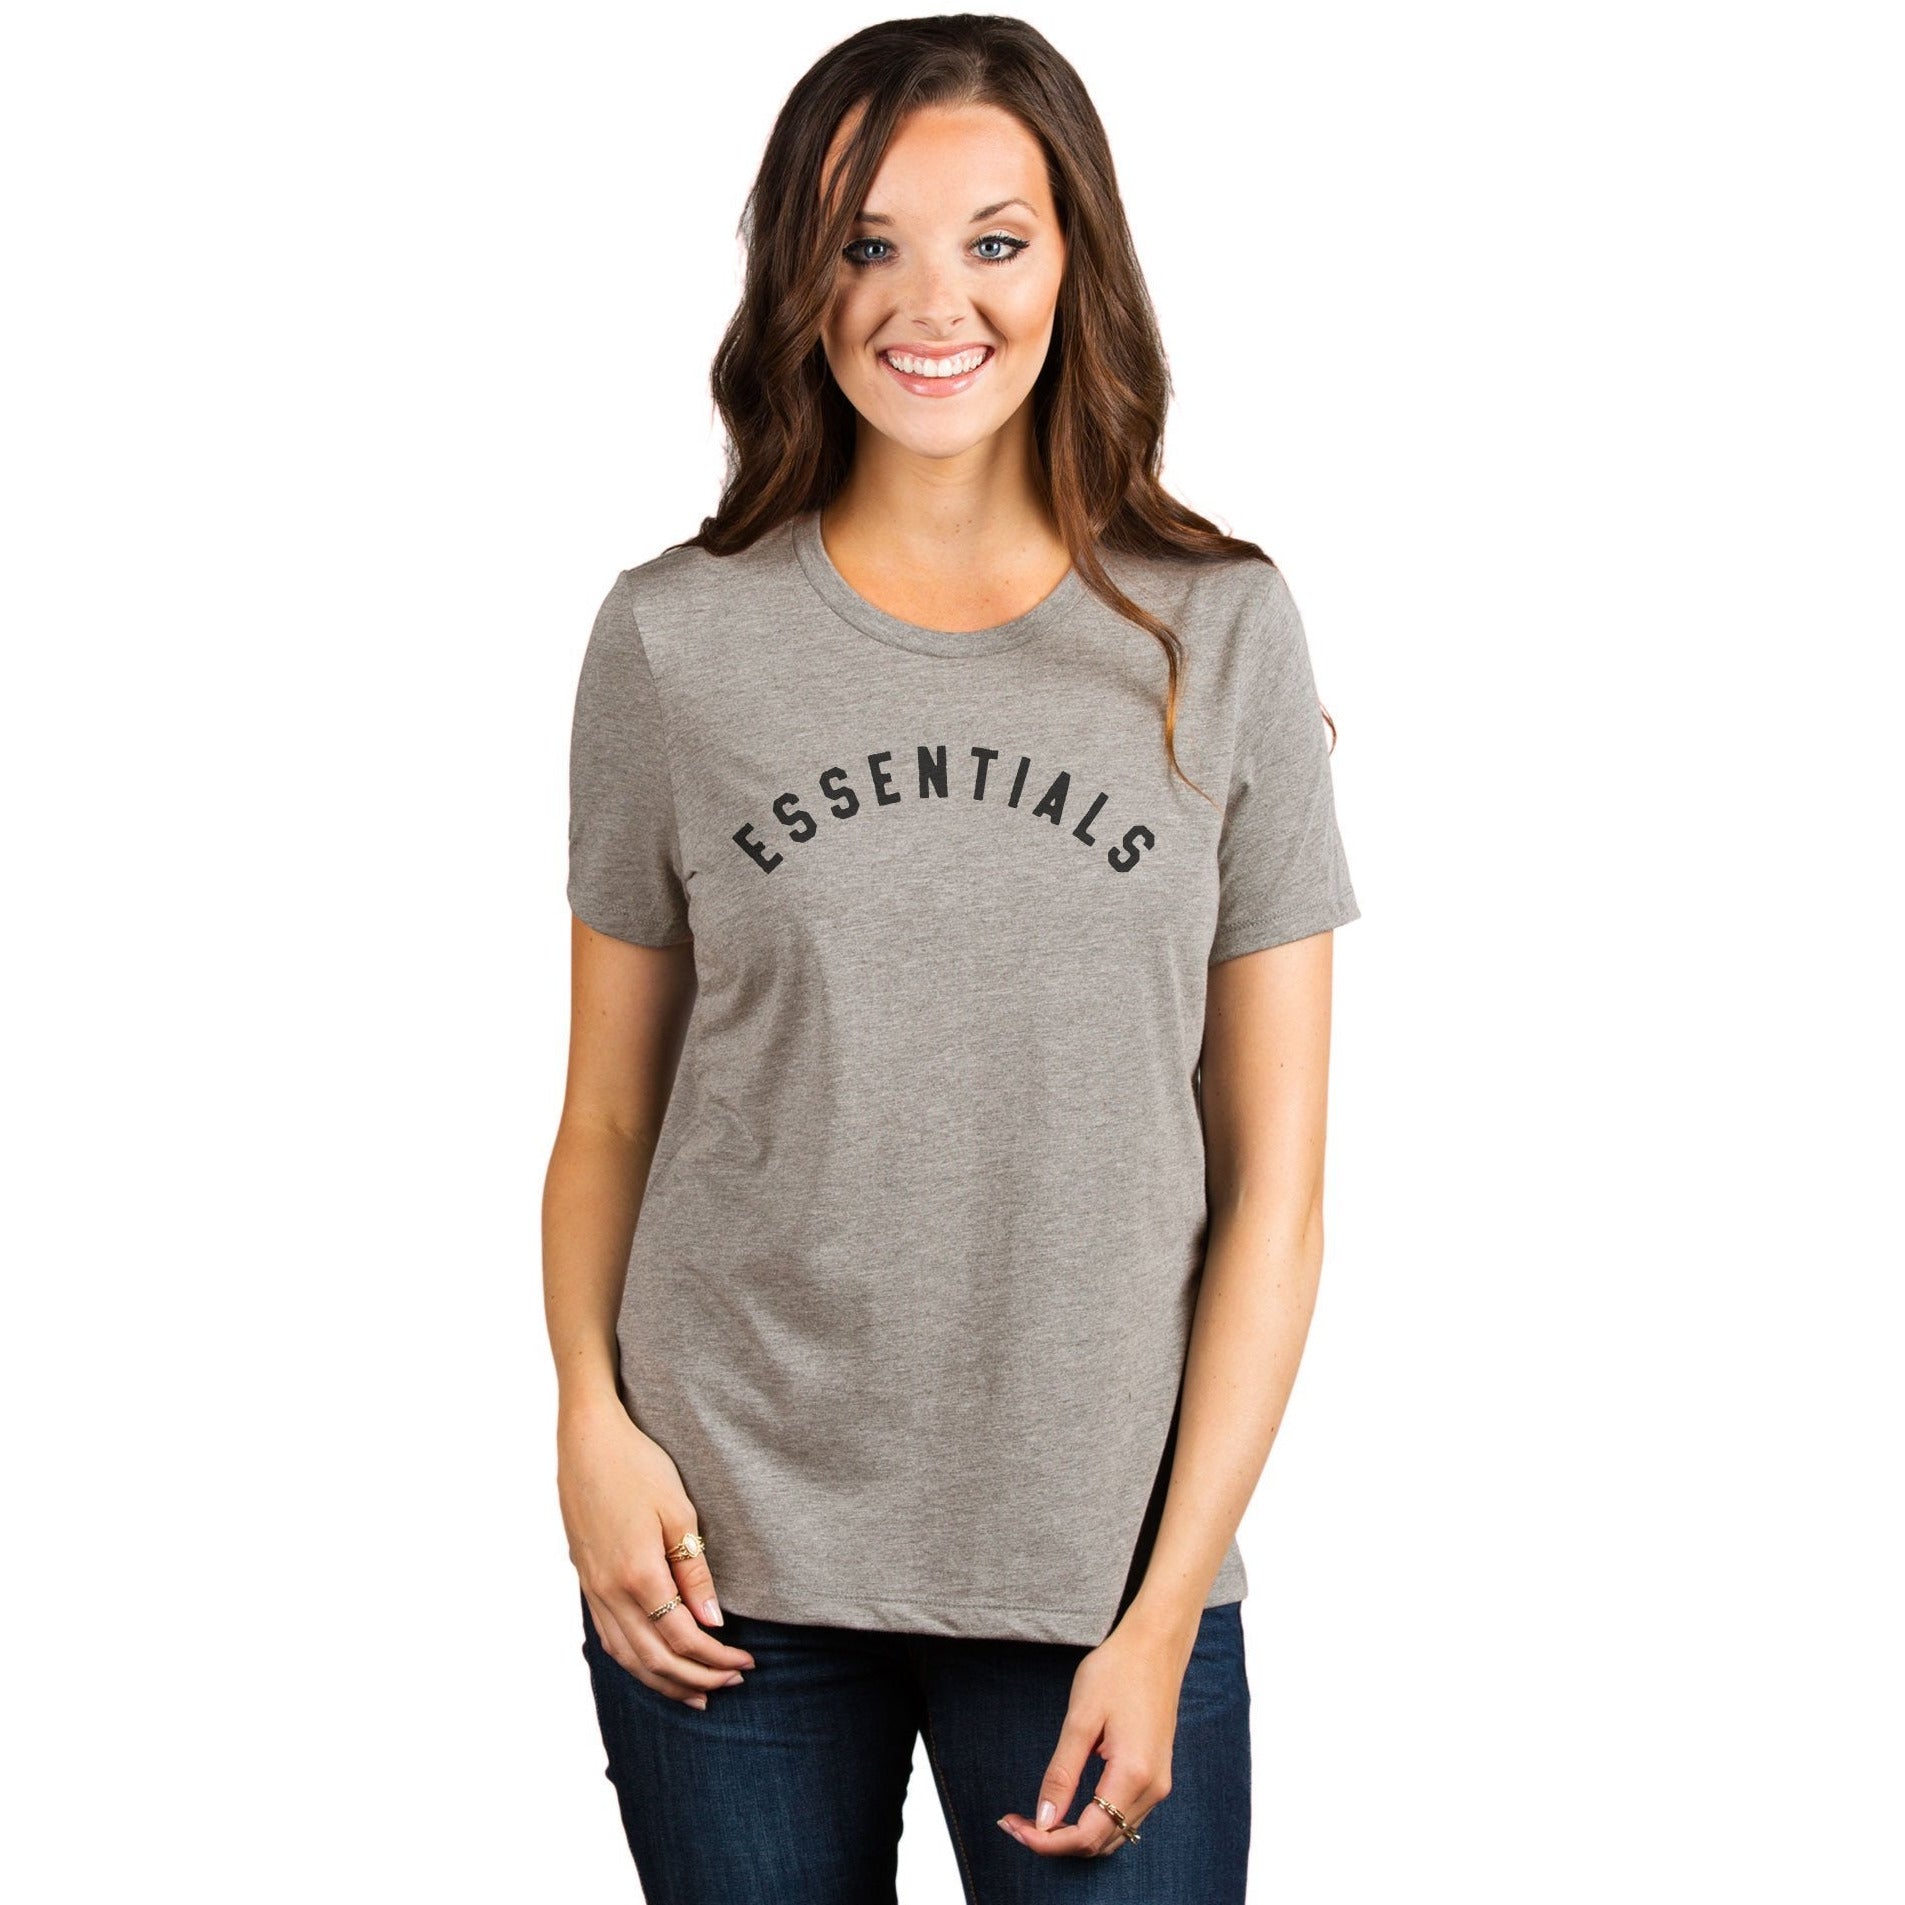 Essentials Women's Relaxed Crewneck T-Shirt Top Tee Charcoal Model
